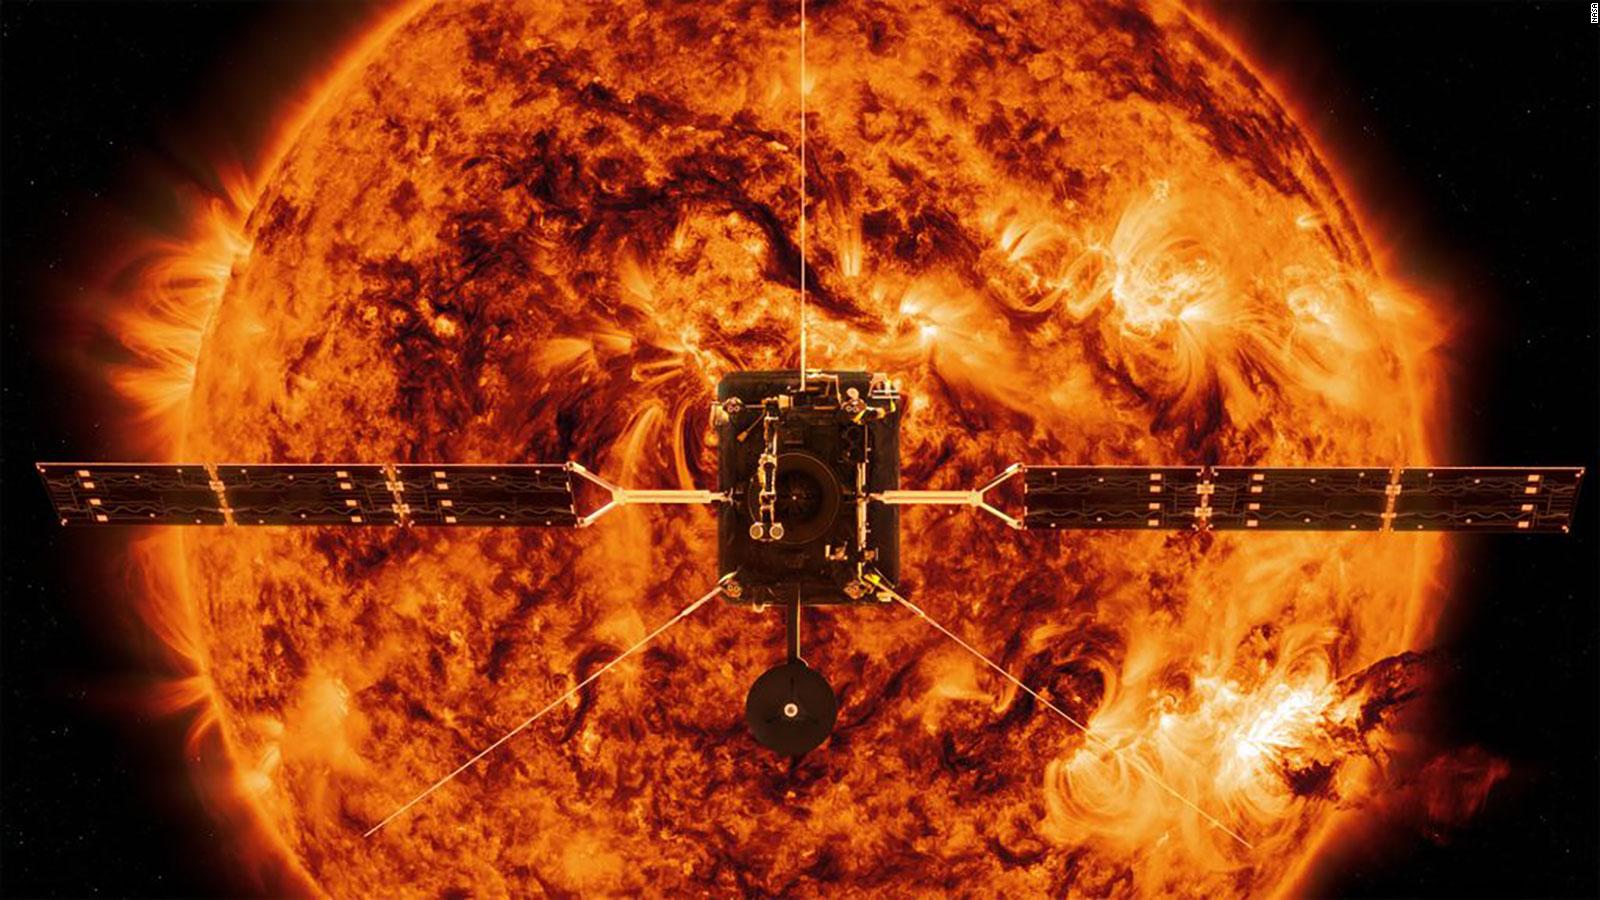 nasa solar orbiter images